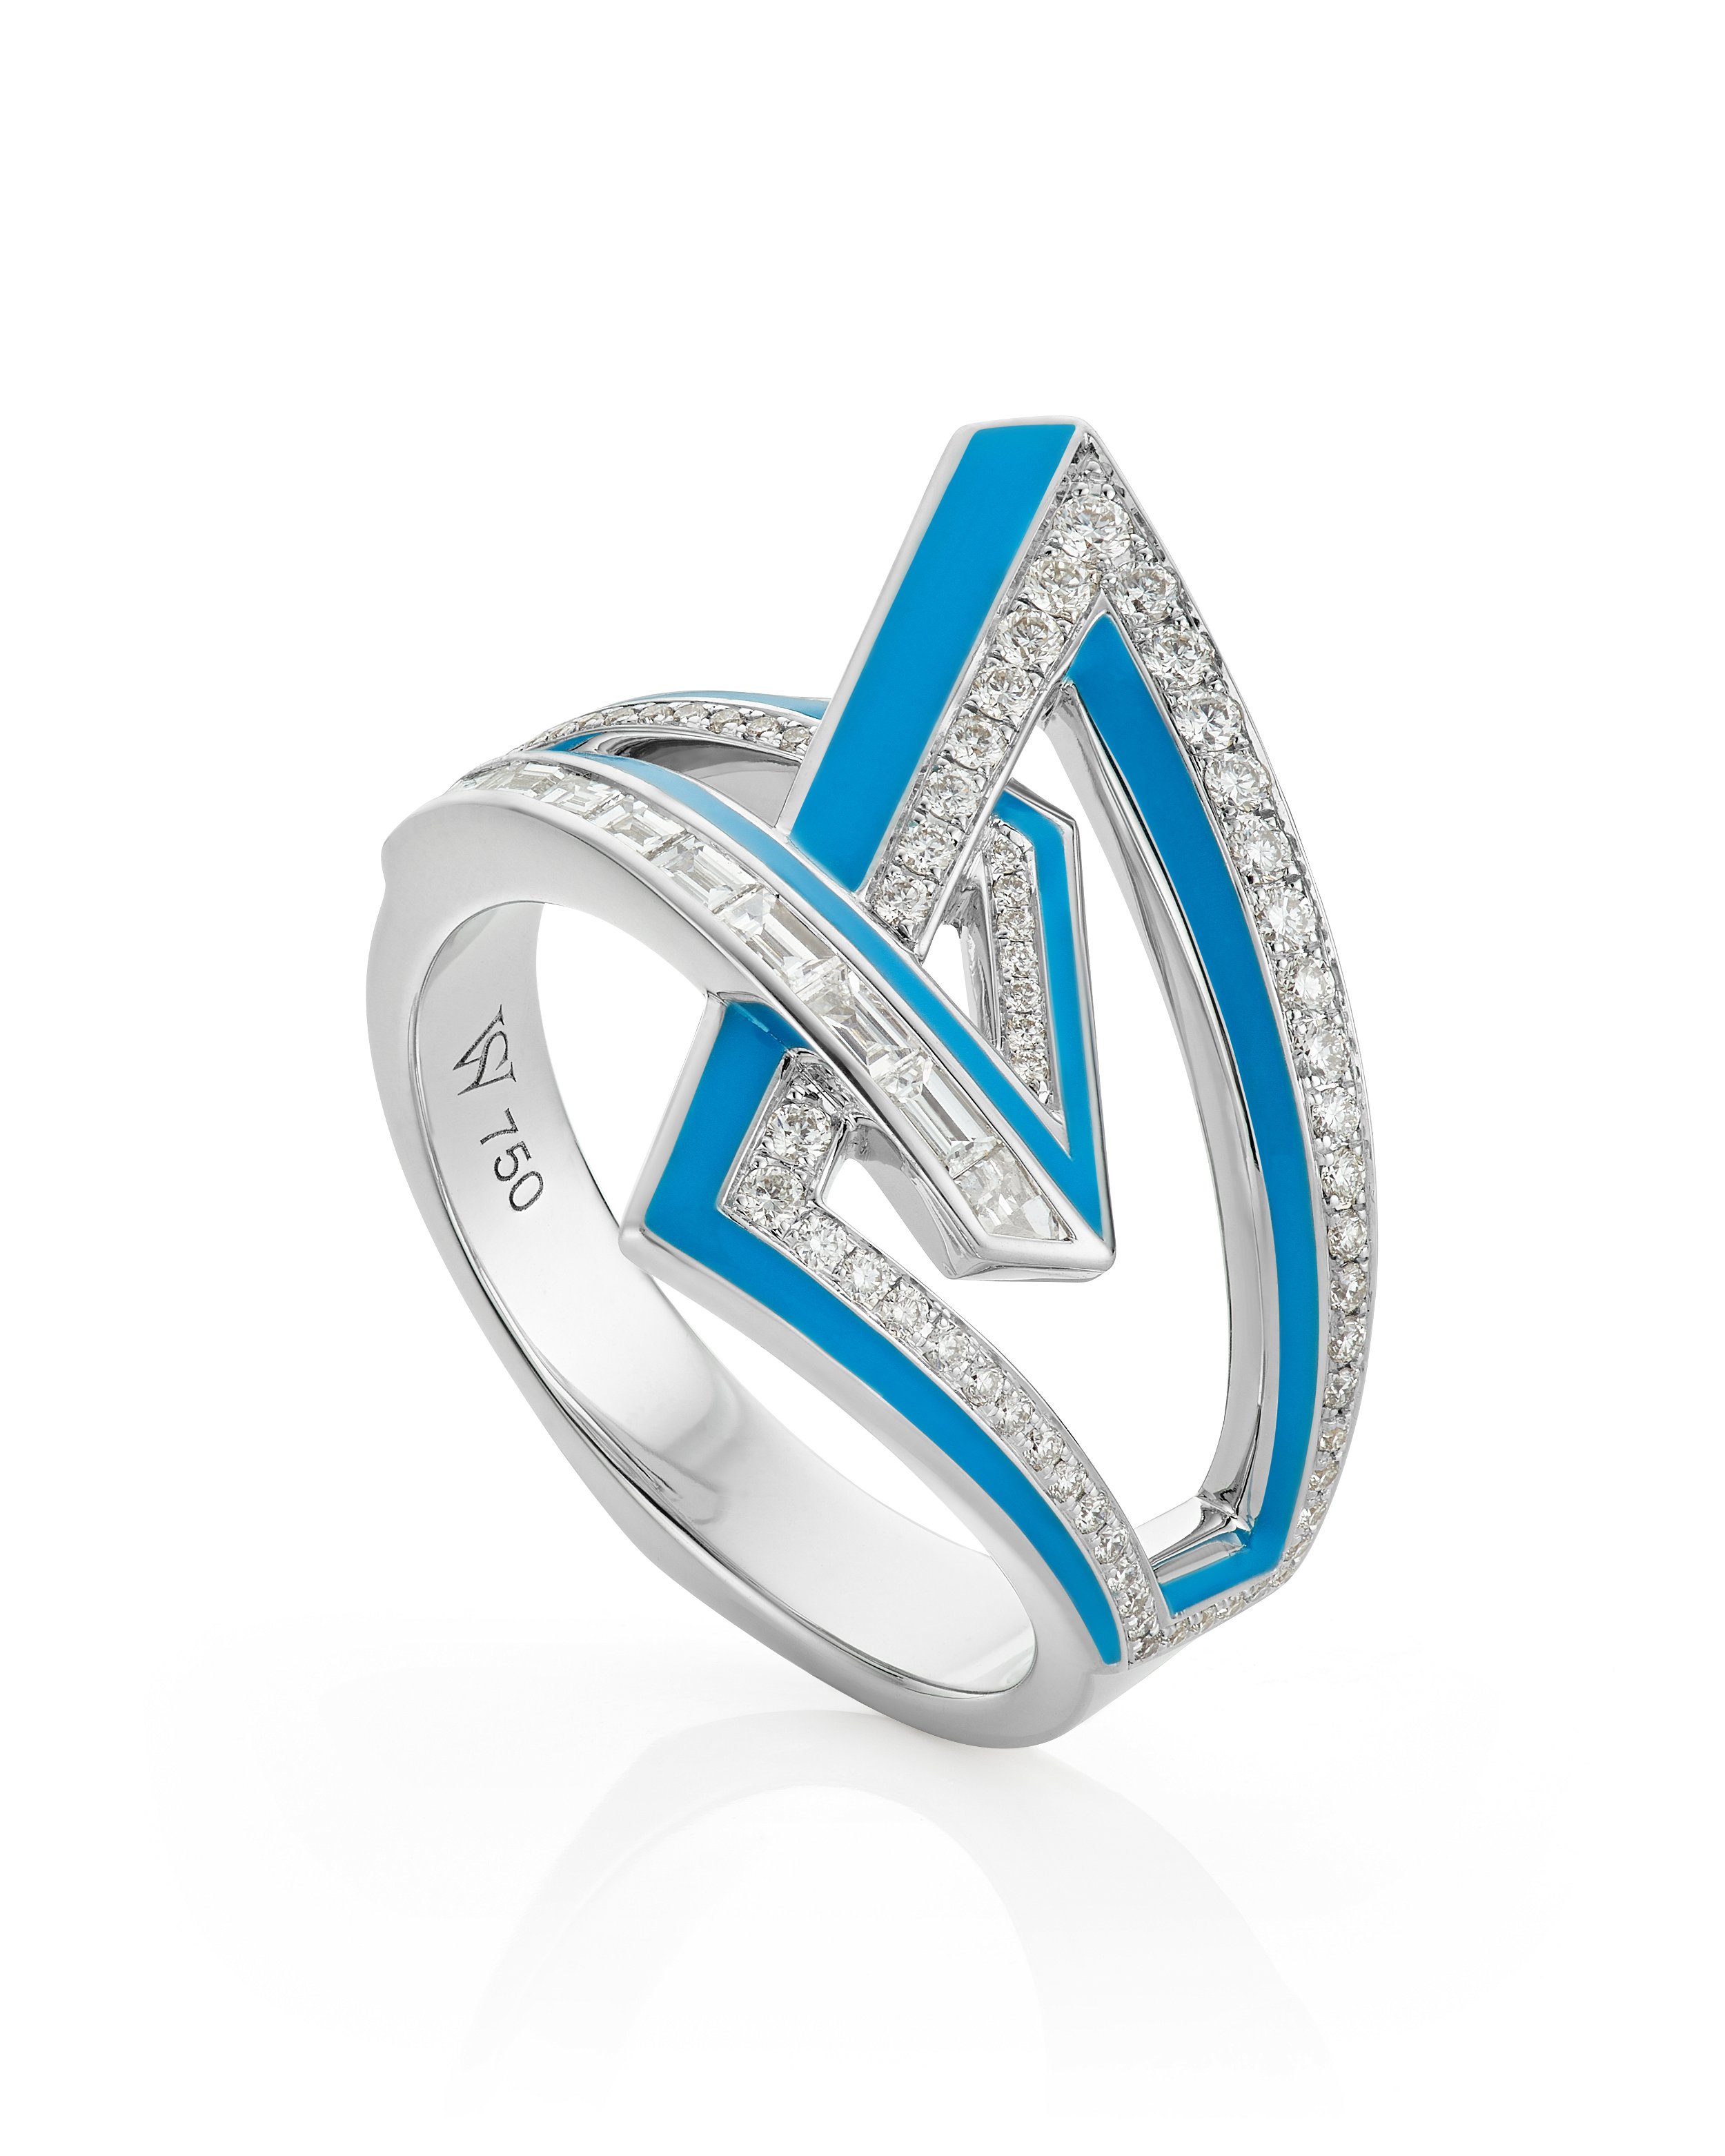 Vertigo Infinity Ring with White Diamonds and Light Blue Enamel in 18kt White Gold - Size 7